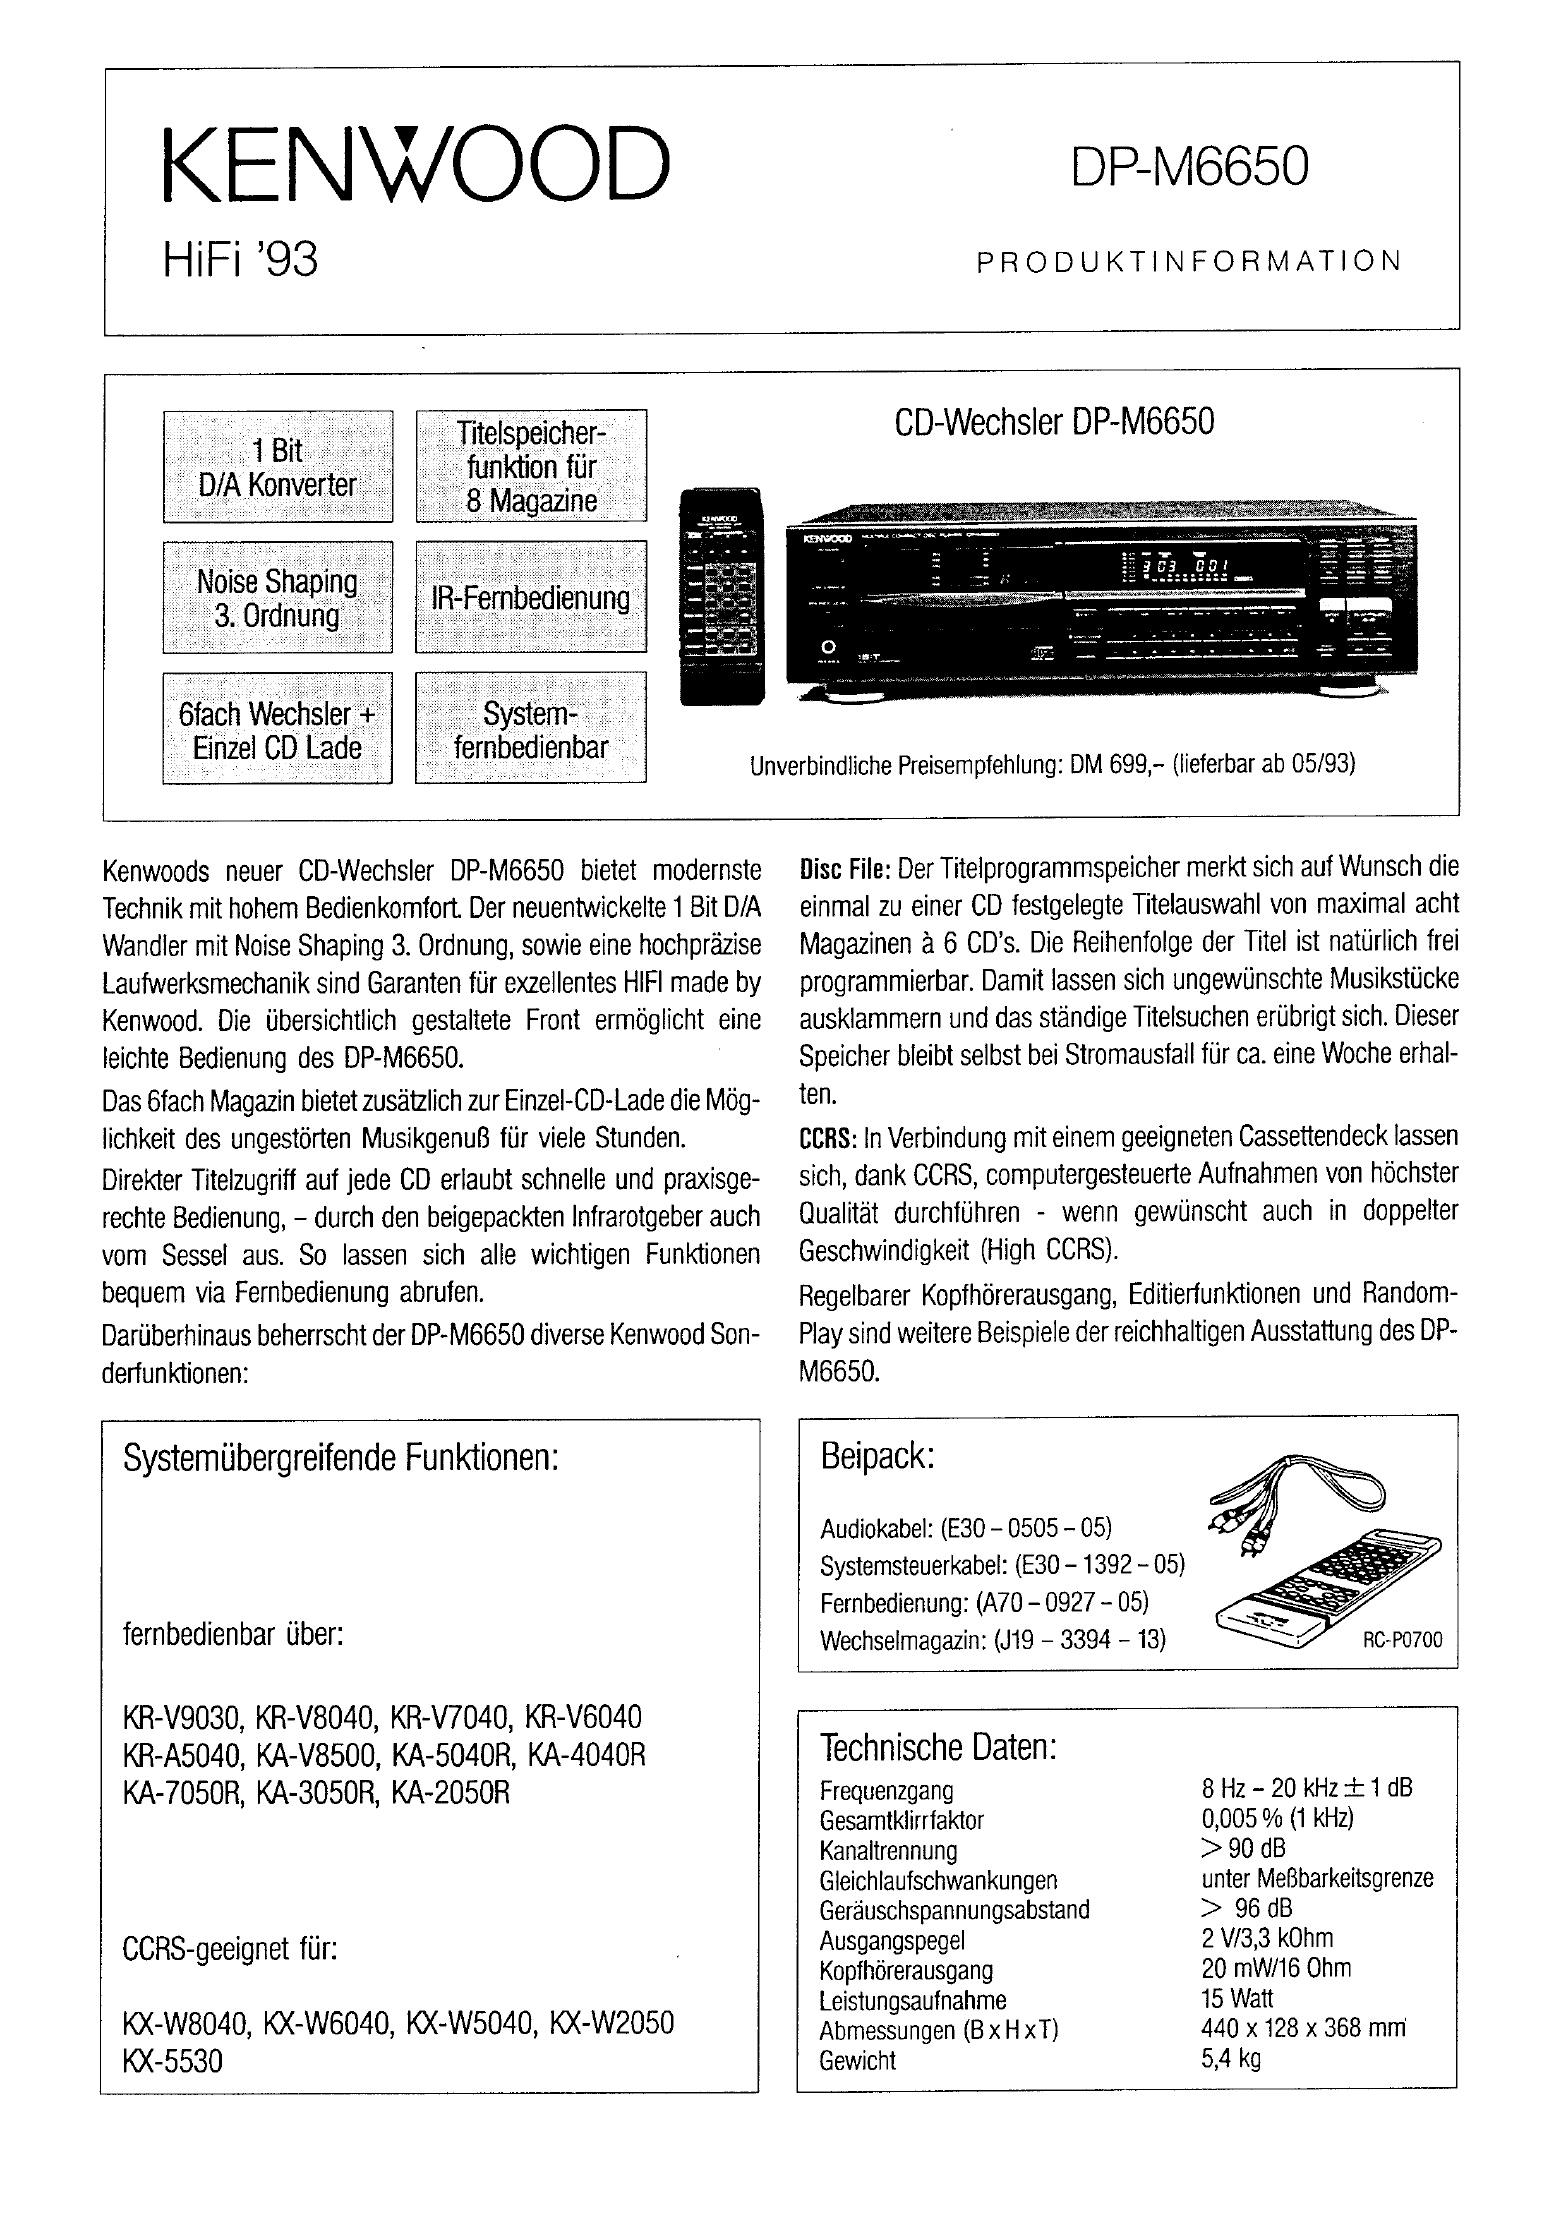 Kenwood DP-M 6650-Prospekt-1993.jpg